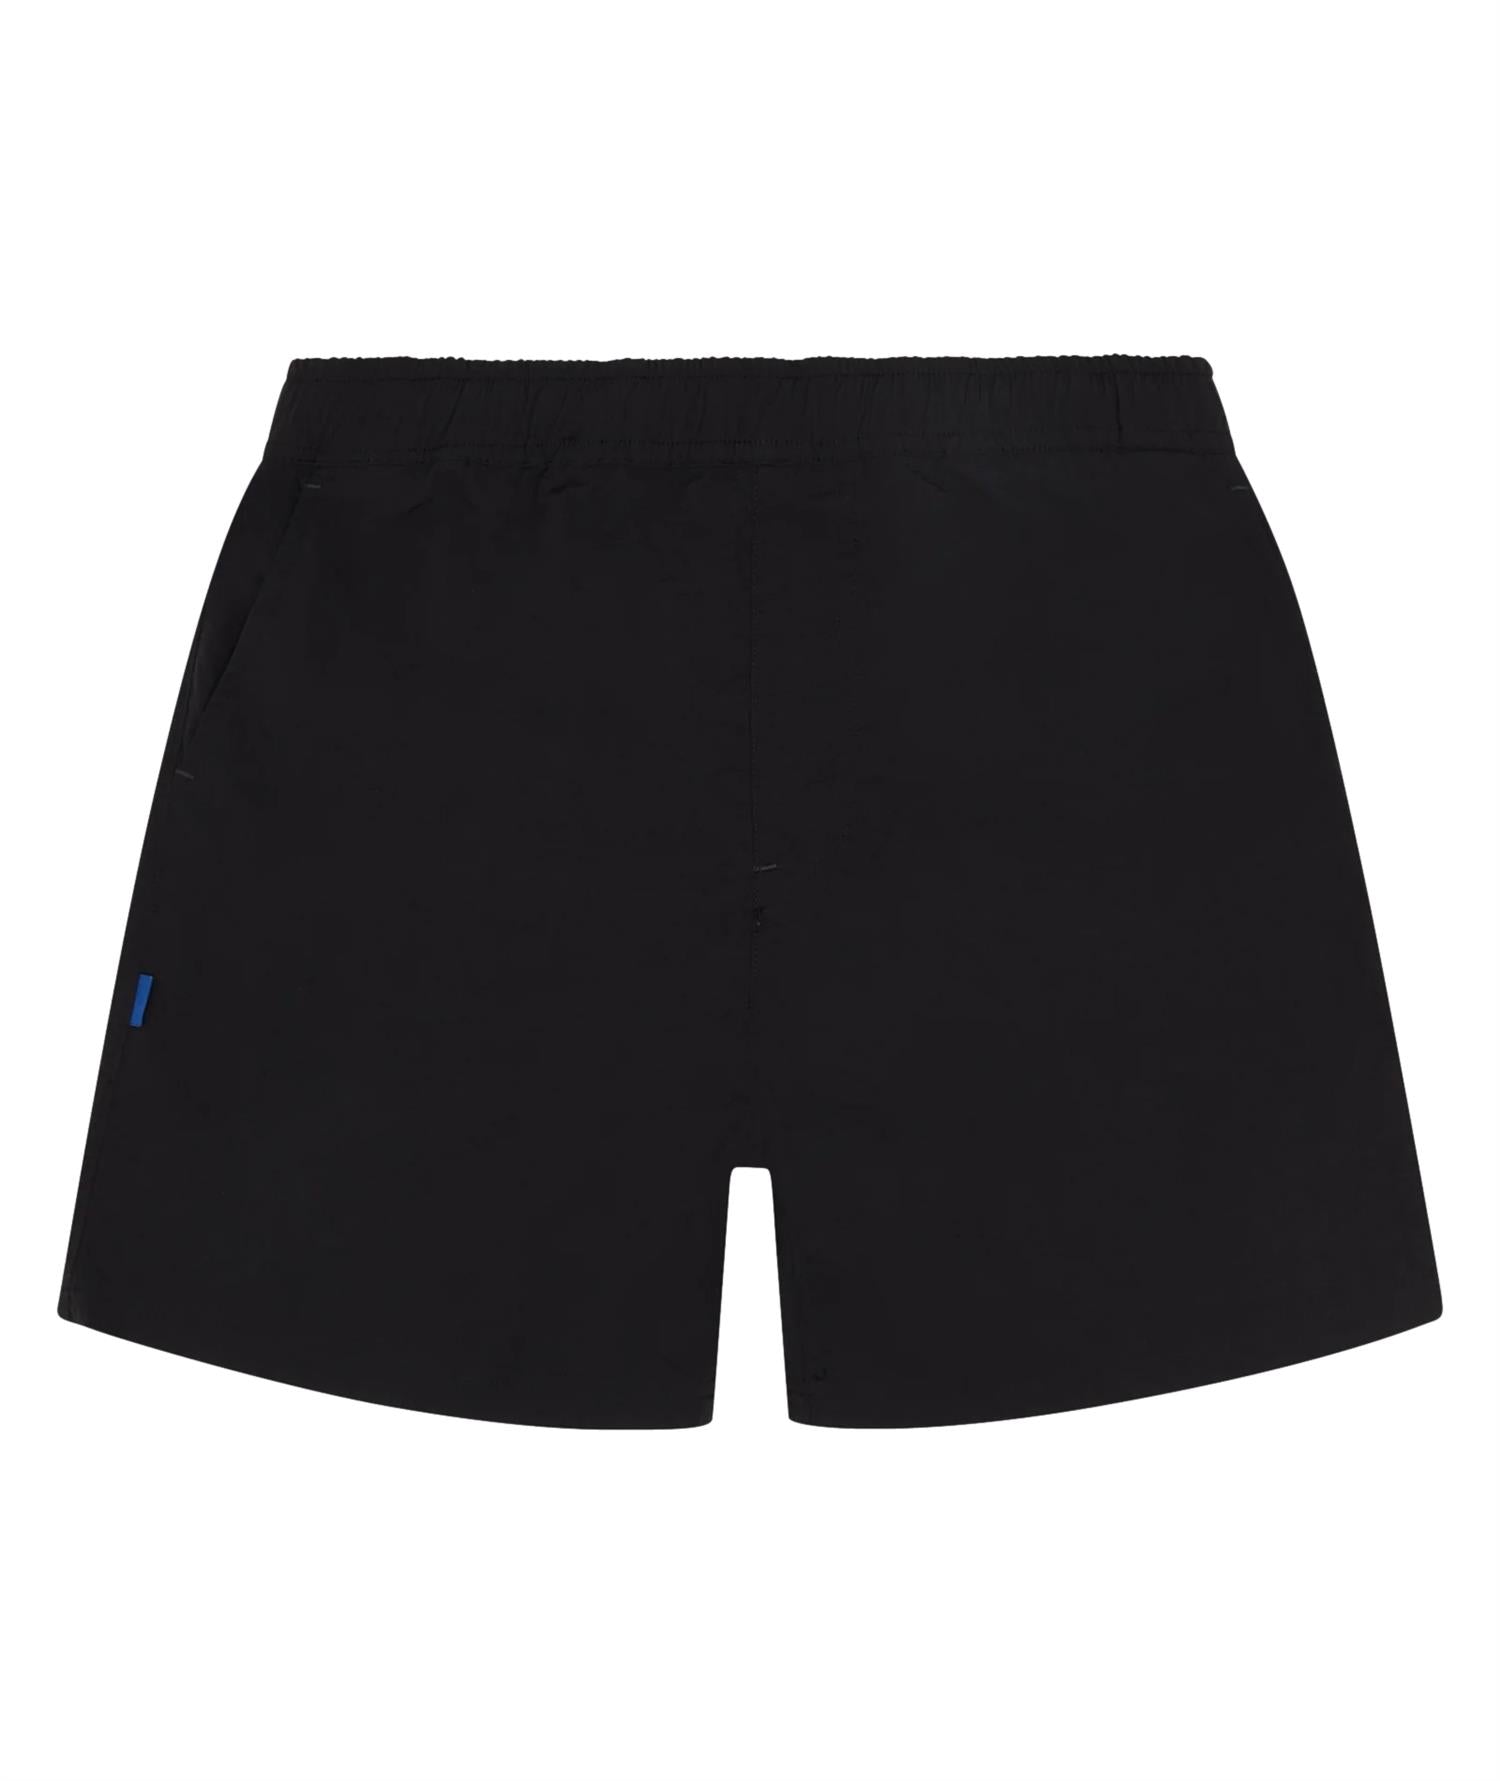 Garment Project Tech Shorts Shorts Sort - modostore.no